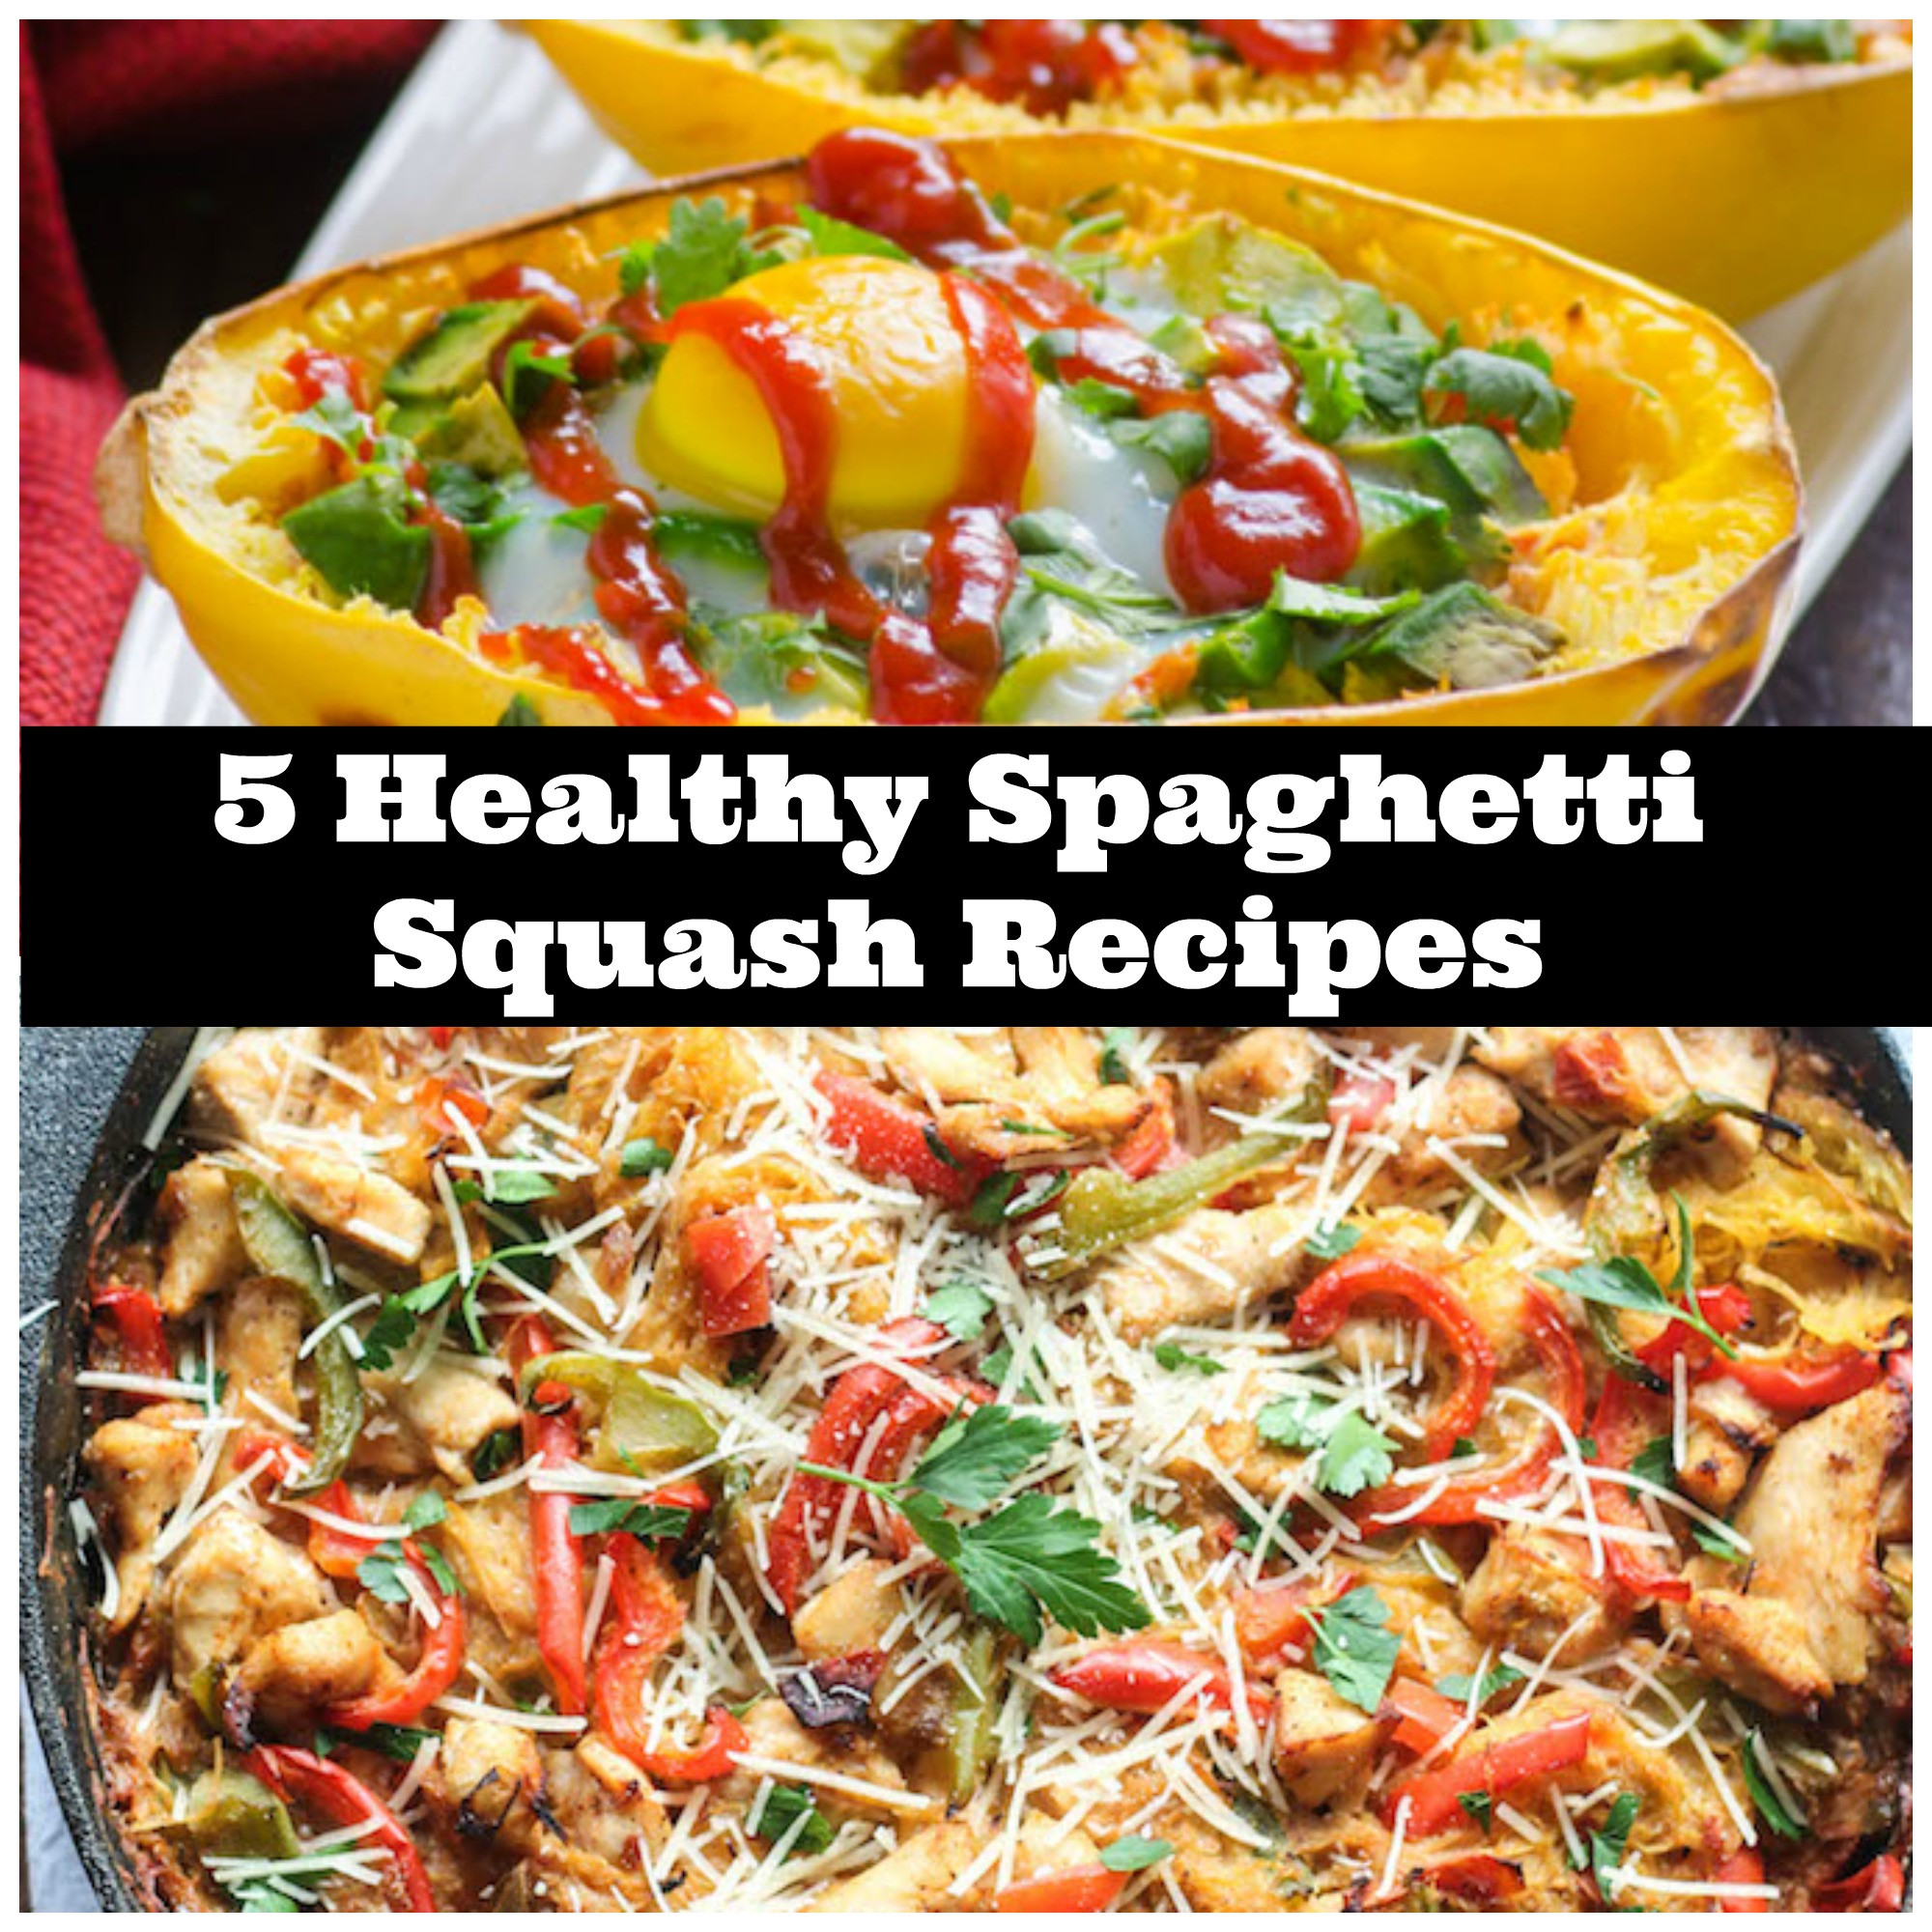 Spaghetti Squash Healthy Recipes
 5 Healthy Spaghetti Squash Recipes to Try